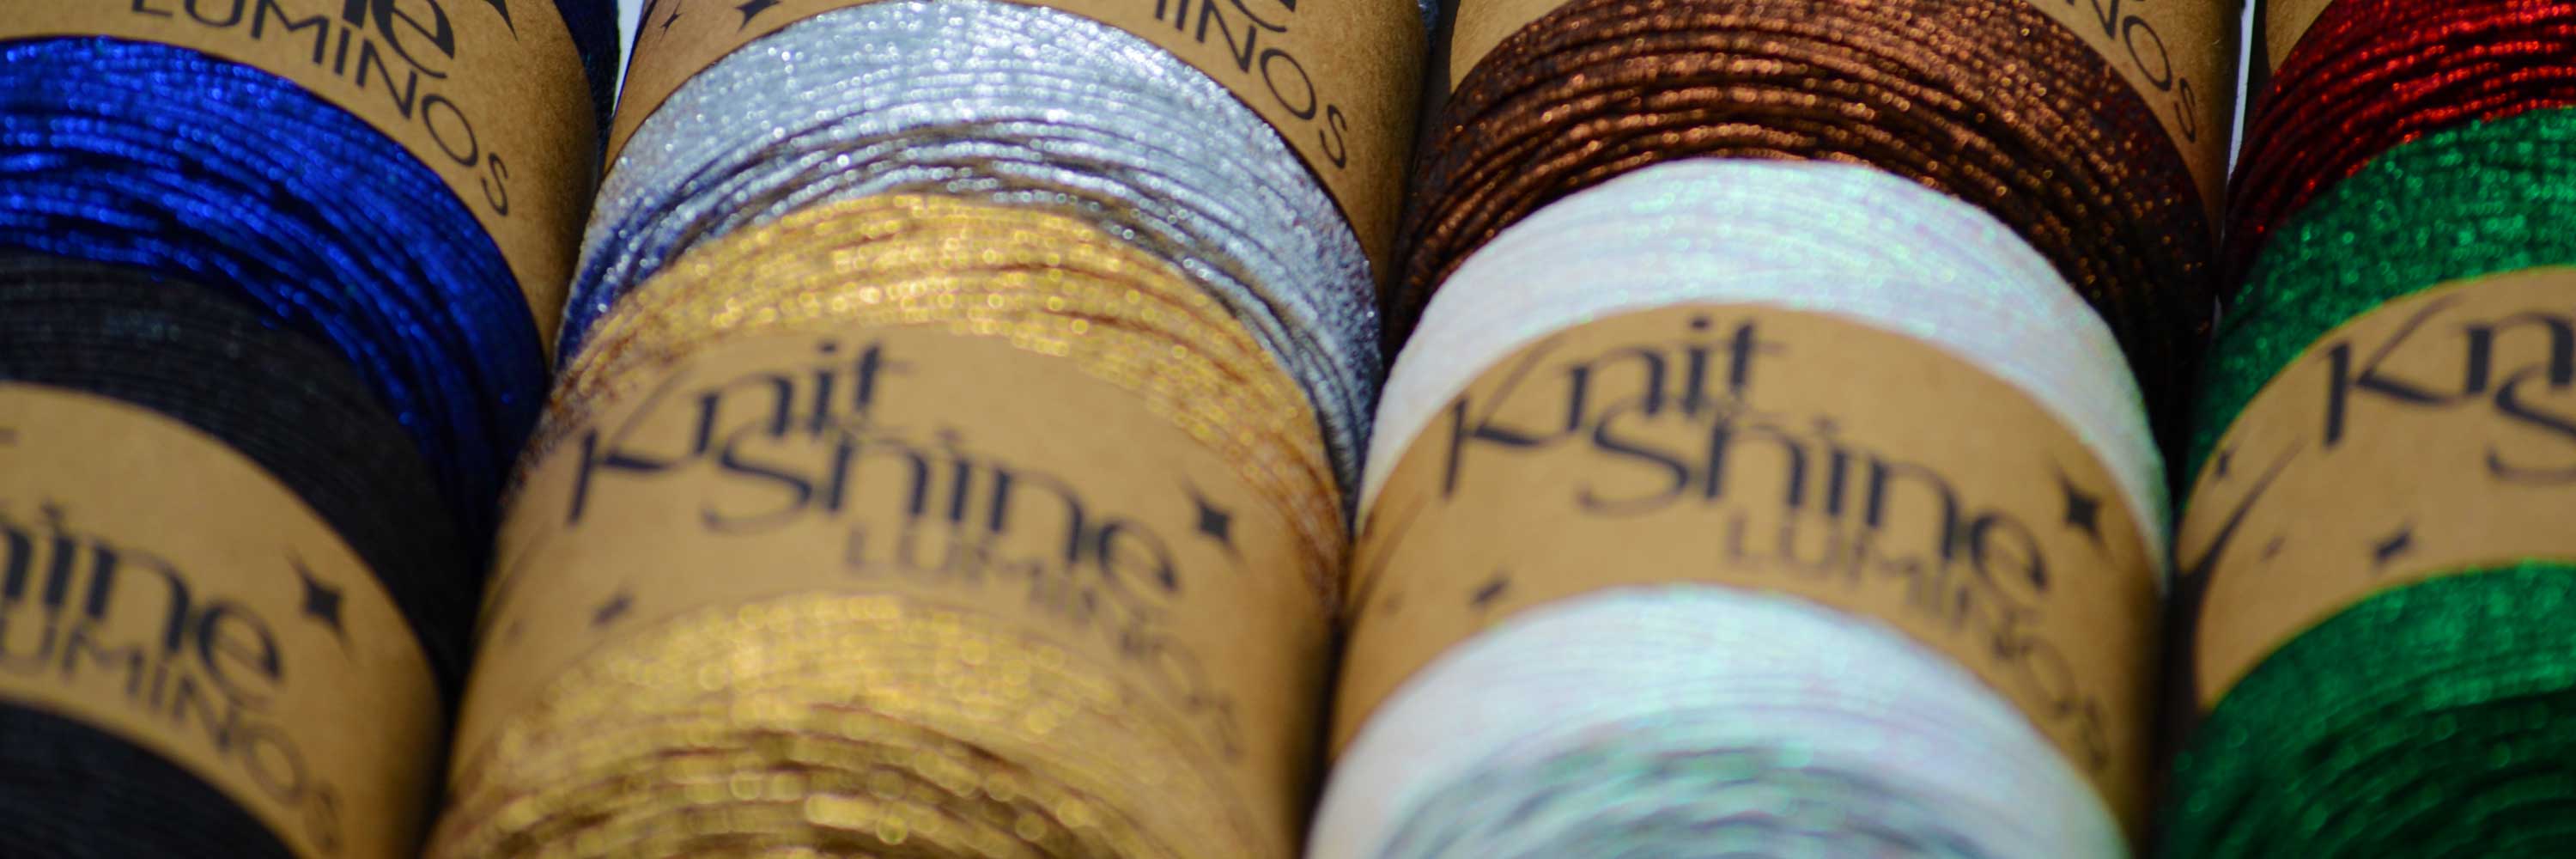 metallic yarns knit and shine knit & shine shiny metal yarns luminos yarns bugeto yarn